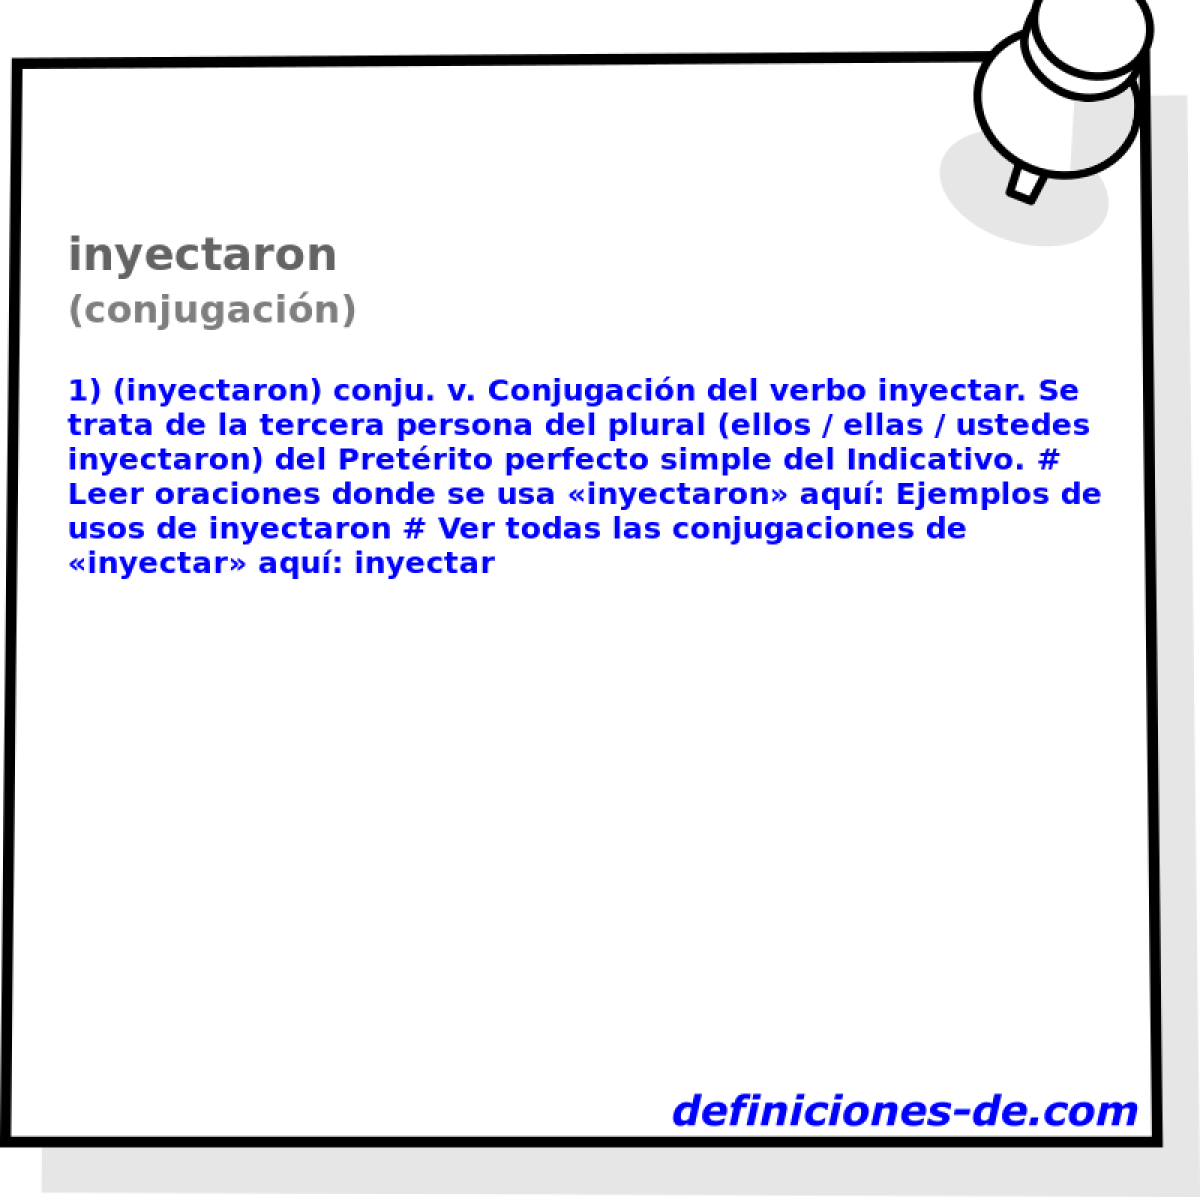 inyectaron (conjugacin)